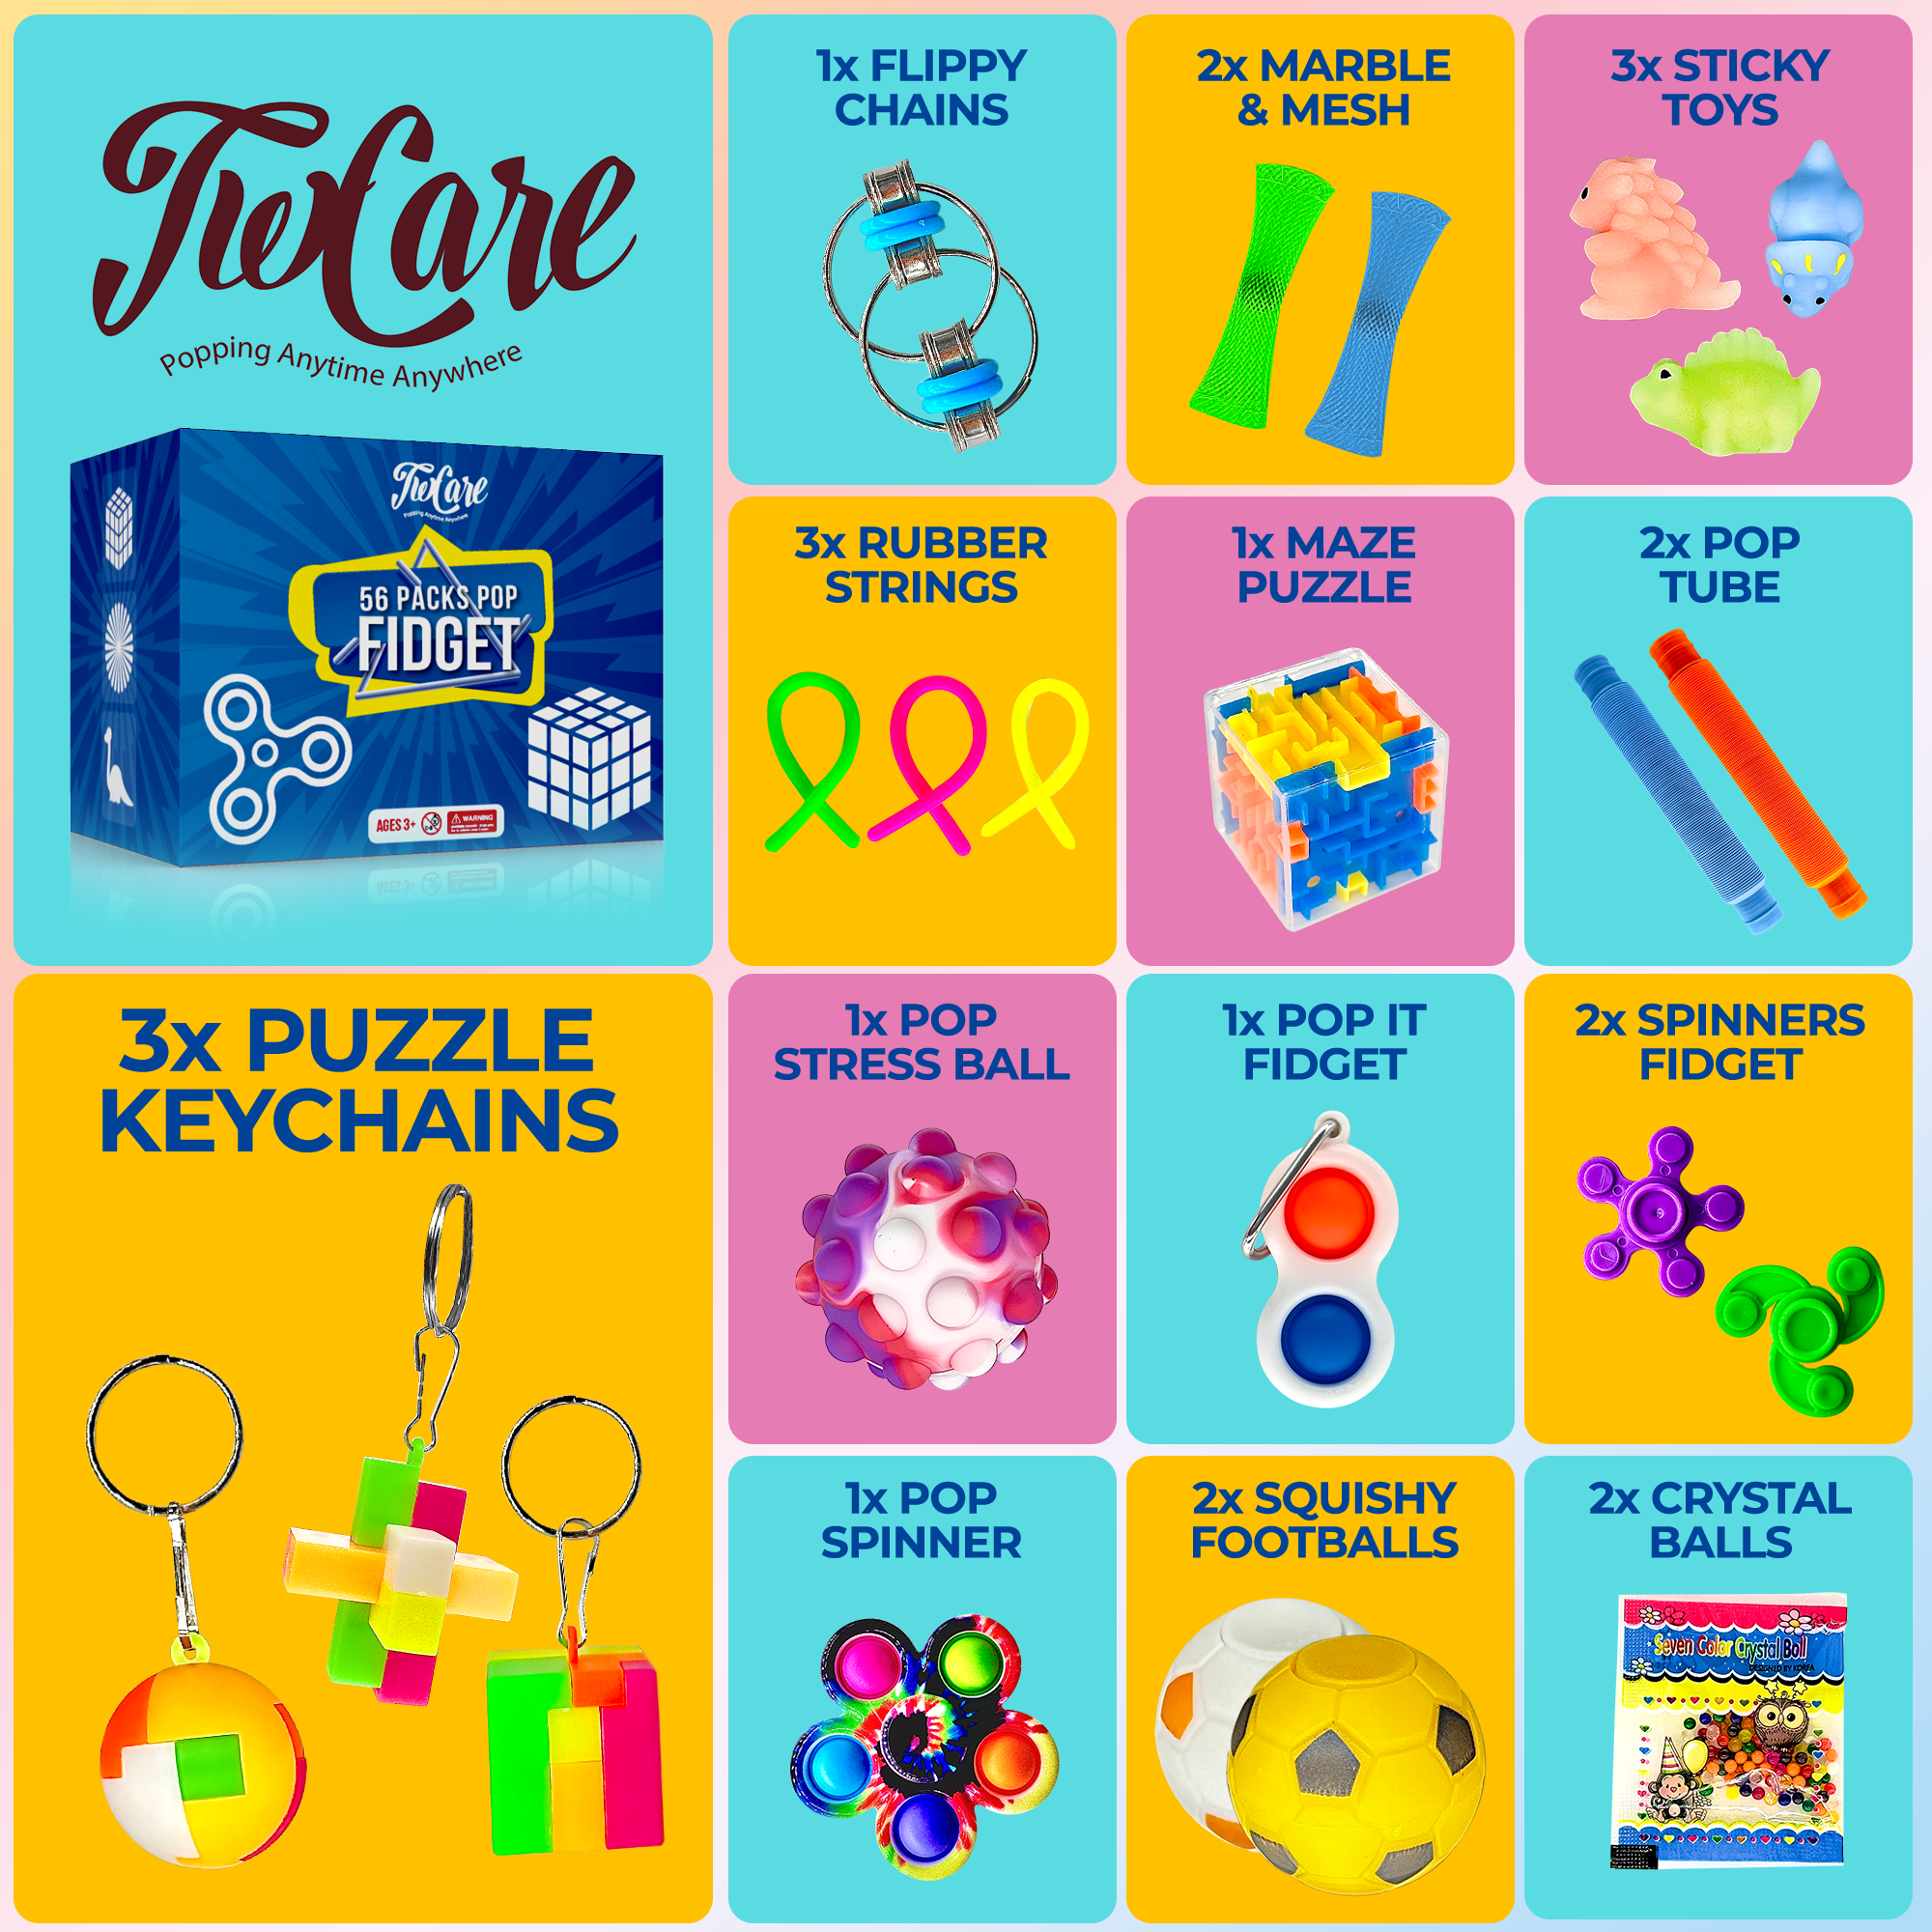 Fidget Toy Pack-Fidgets- Fidget Toys-32Pcs fidget pack in a Toy Box  -Figetget to